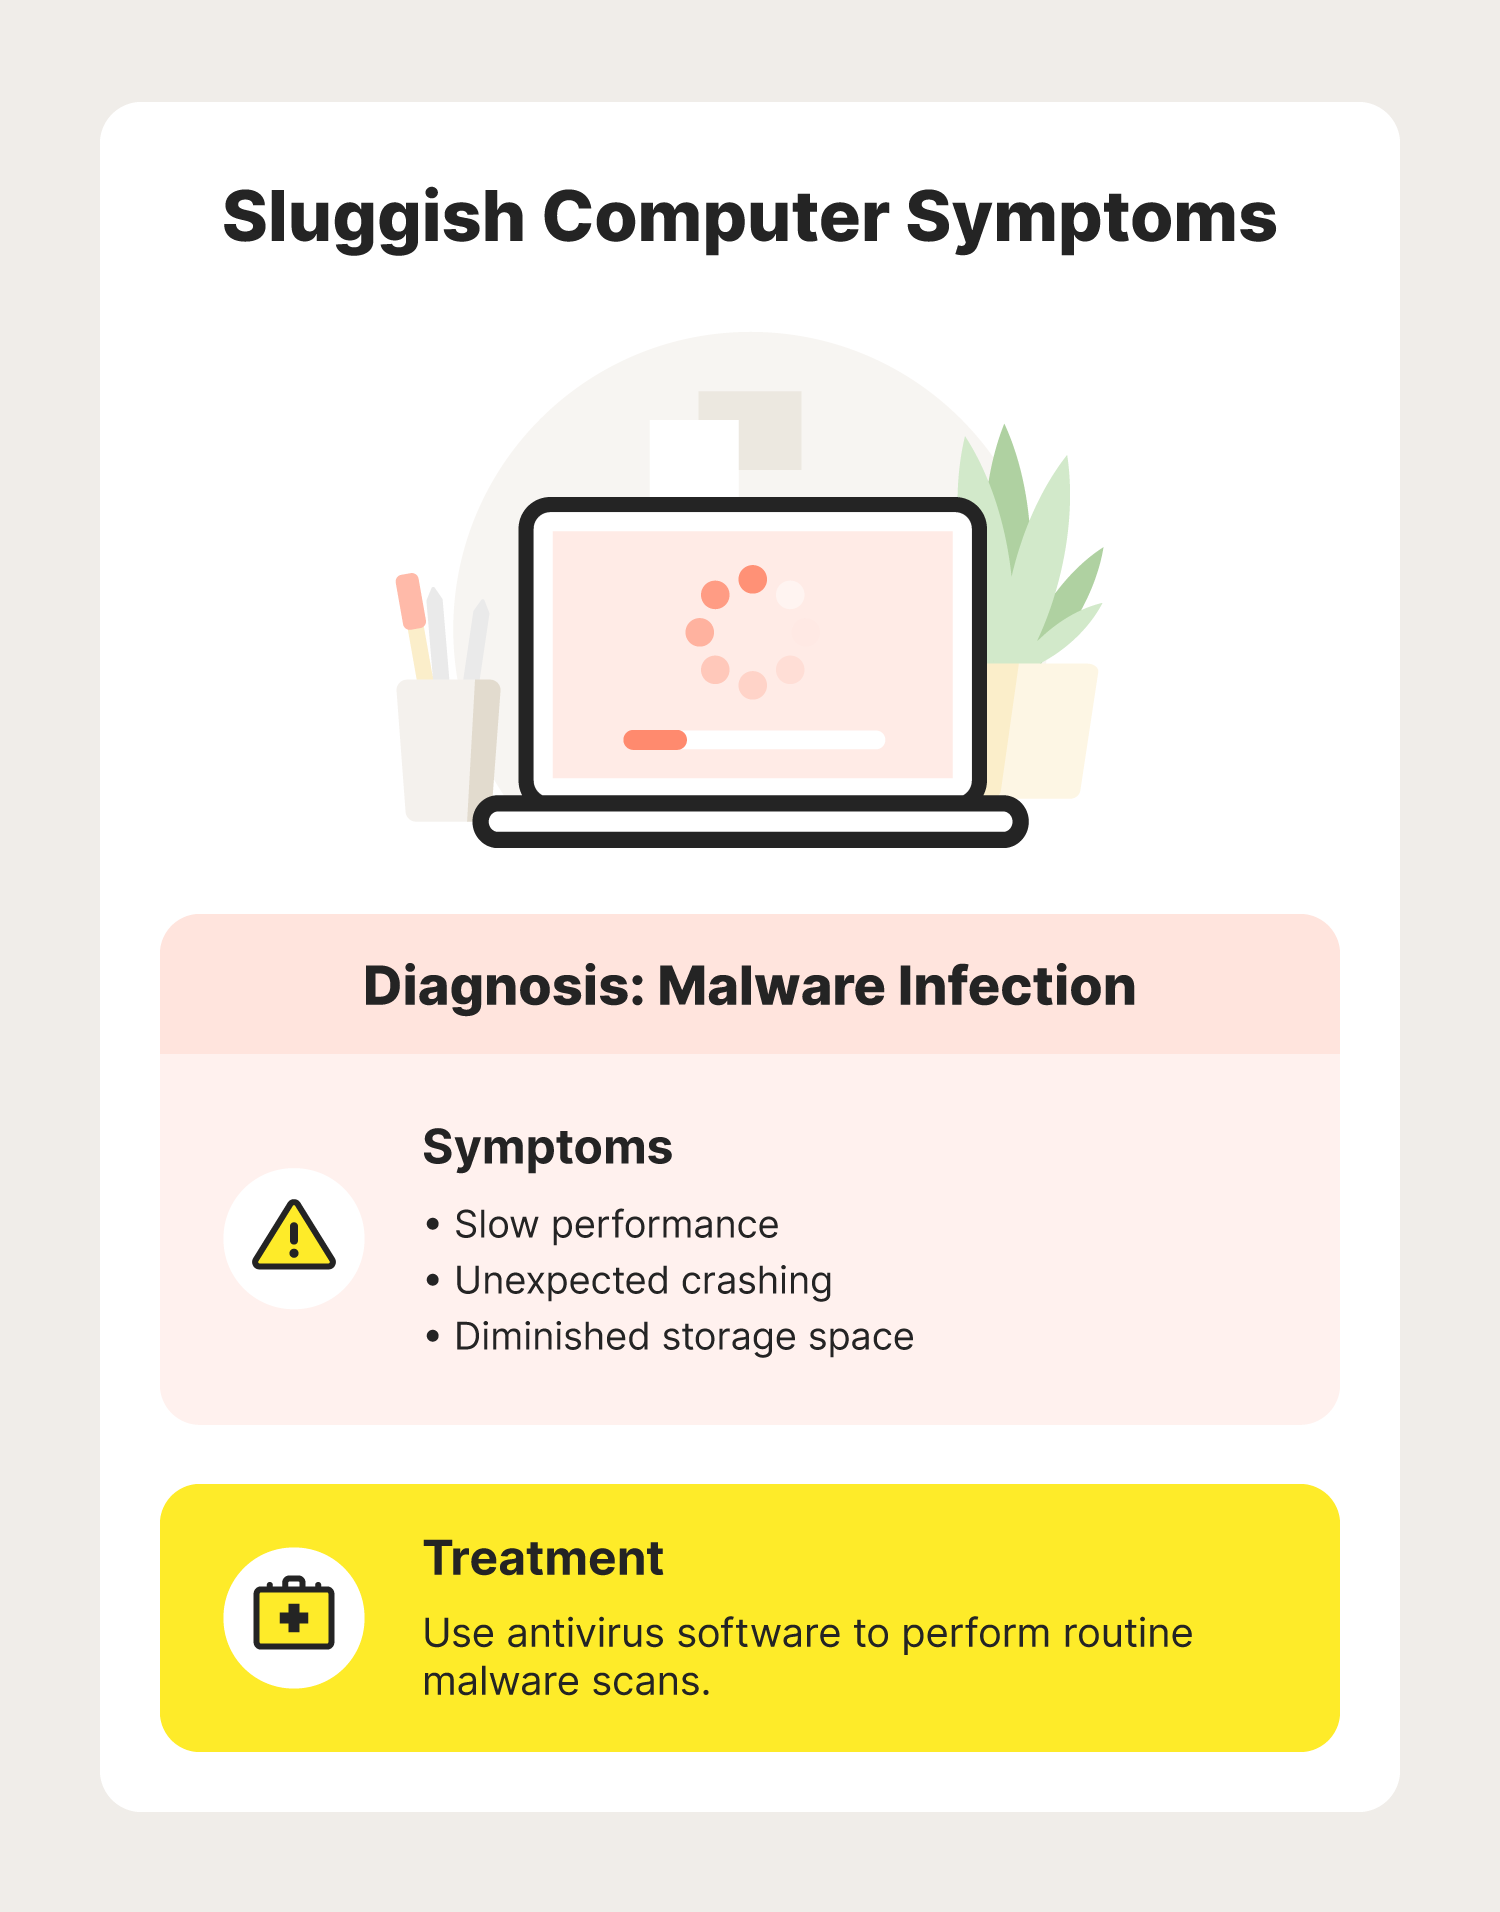 A graphic showcases sluggish computer symptoms that are signs of malware.